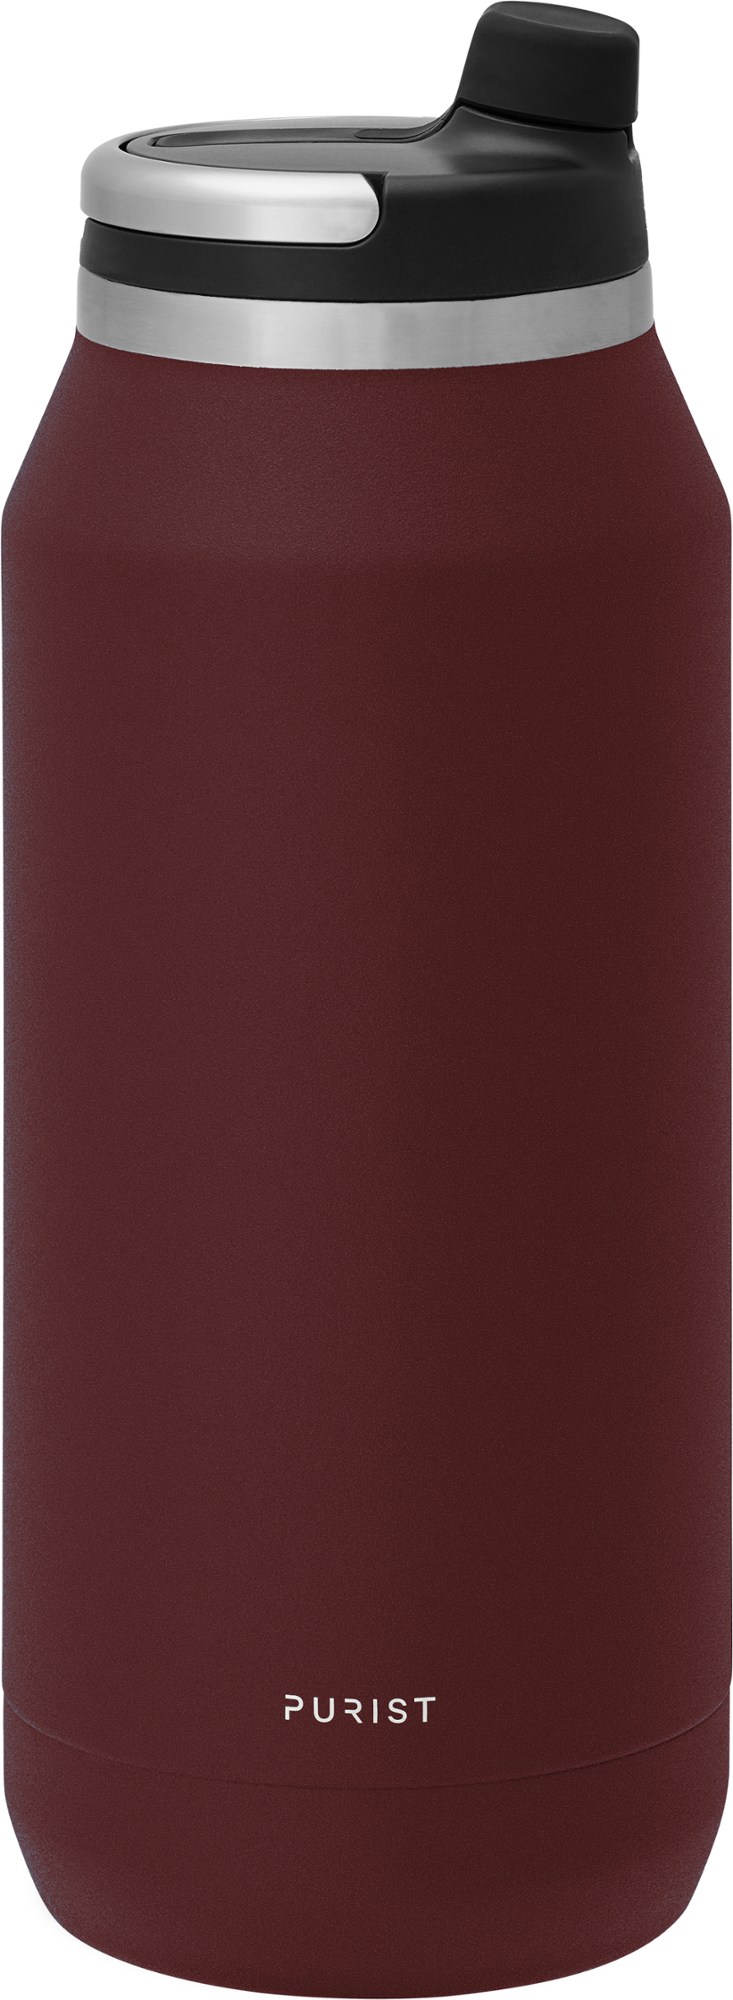 Вакуумная бутылка для воды Founder с крышкой Union Top - 32 эт. унция Purist, красный